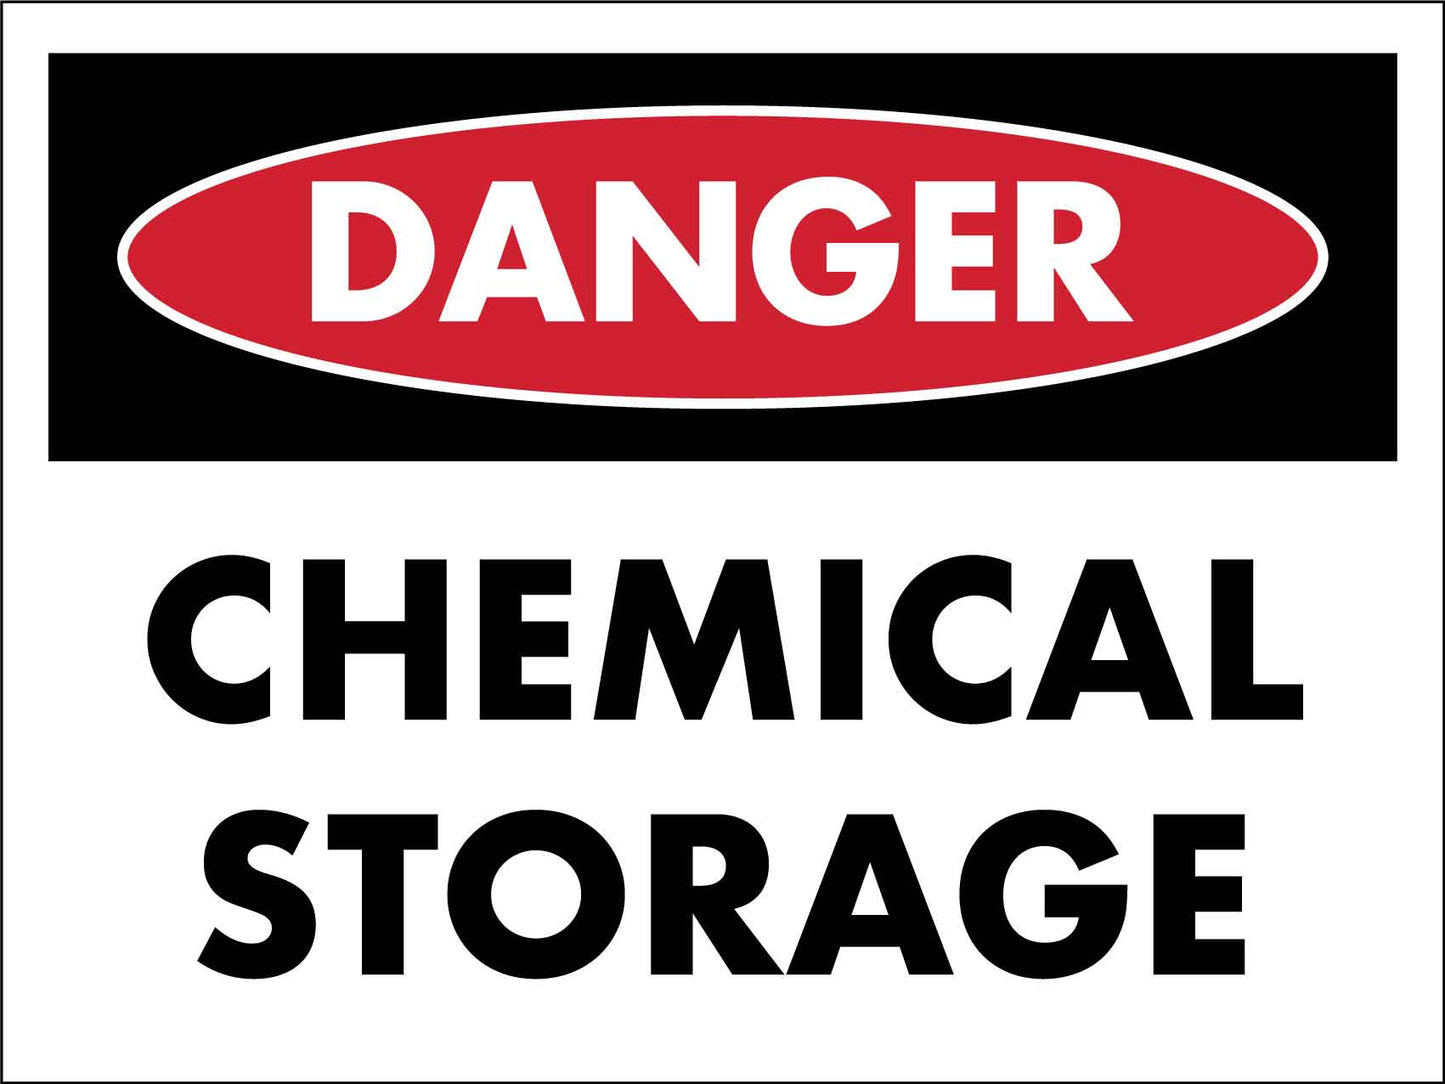 Danger Chemical Storage Sign